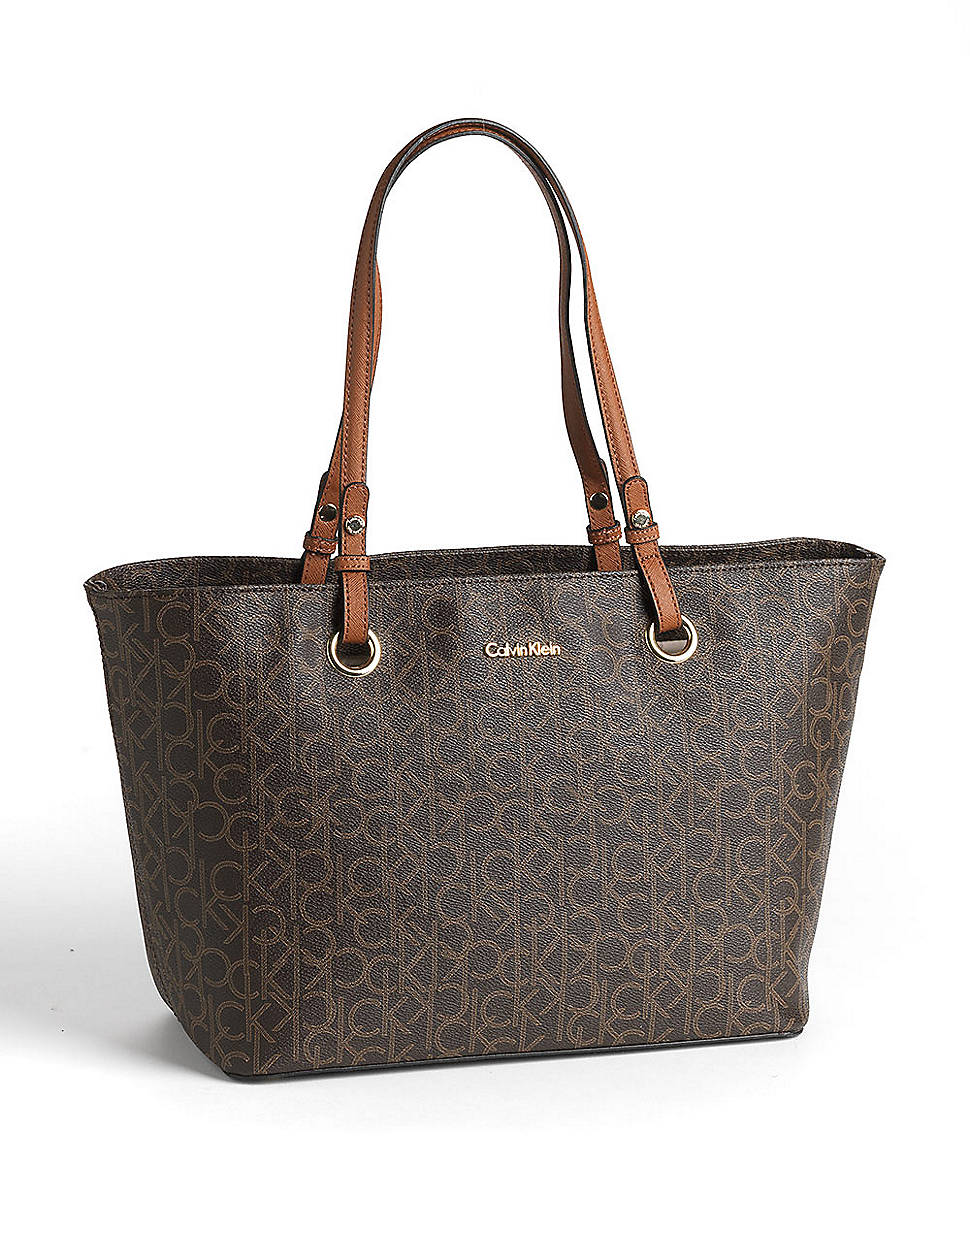 Calvin Klein Monogram Leather Tote Bag in Brown (brown/khaki/luggage) | Lyst